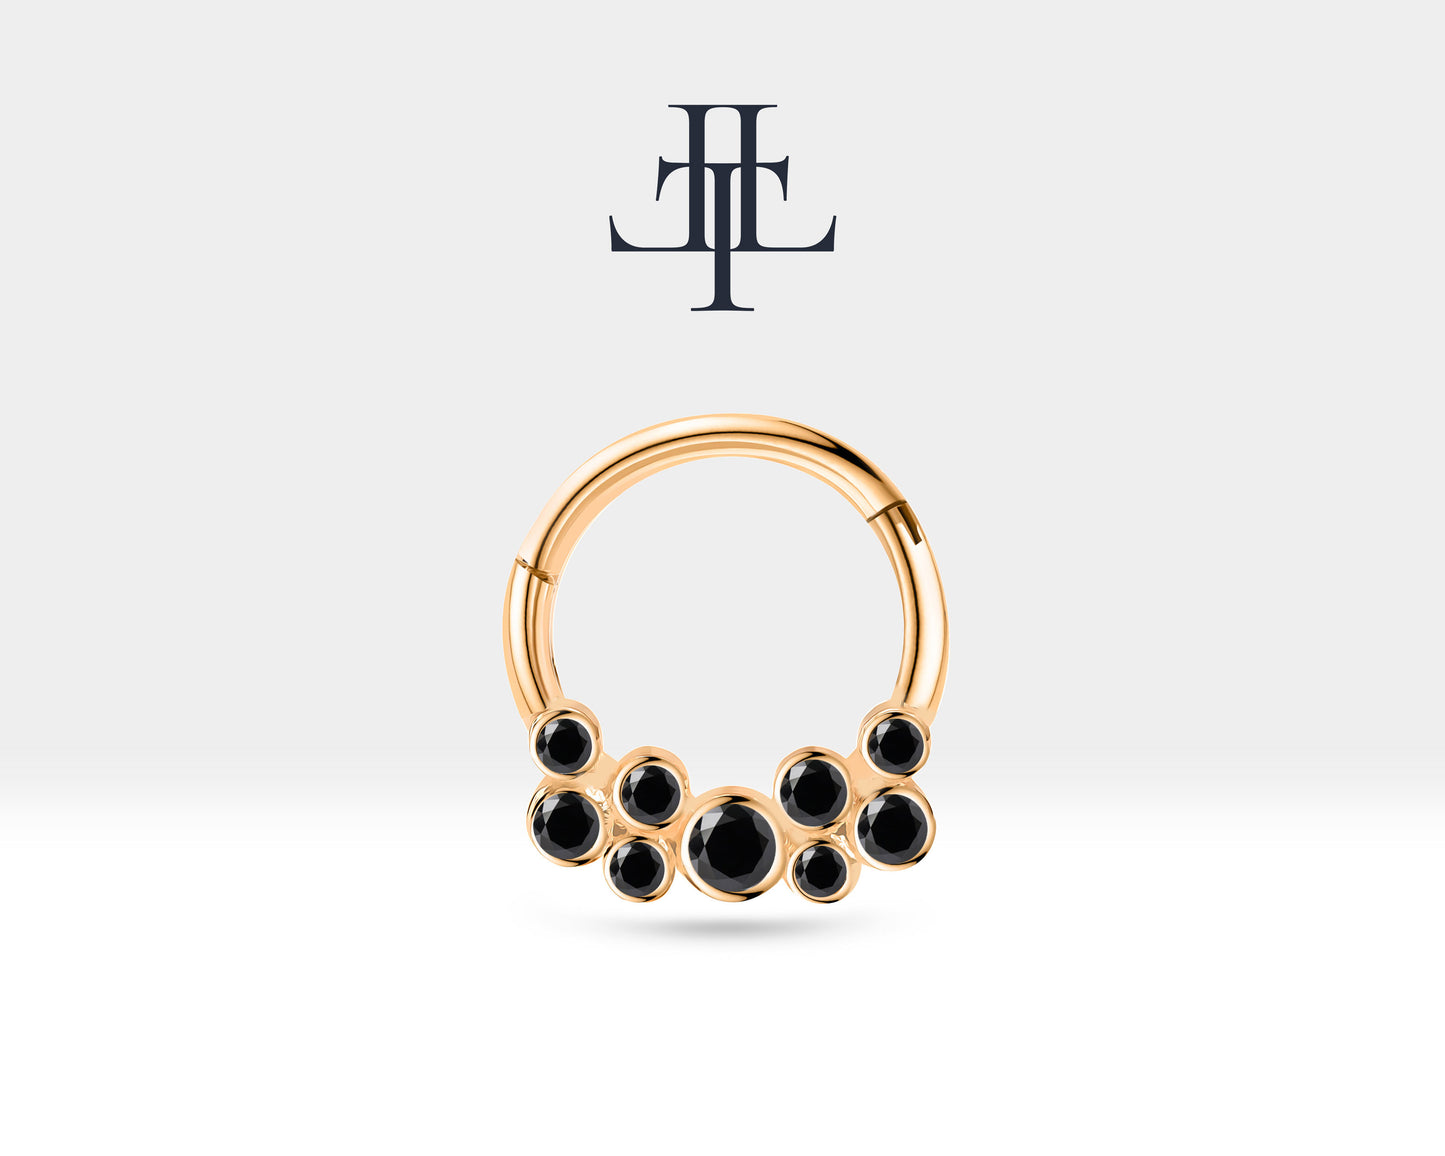 Cartilage Hoop Black Diamond Design Clicker Piercing,Single Earring,14K Yellow Gold,16G(1.2mm)